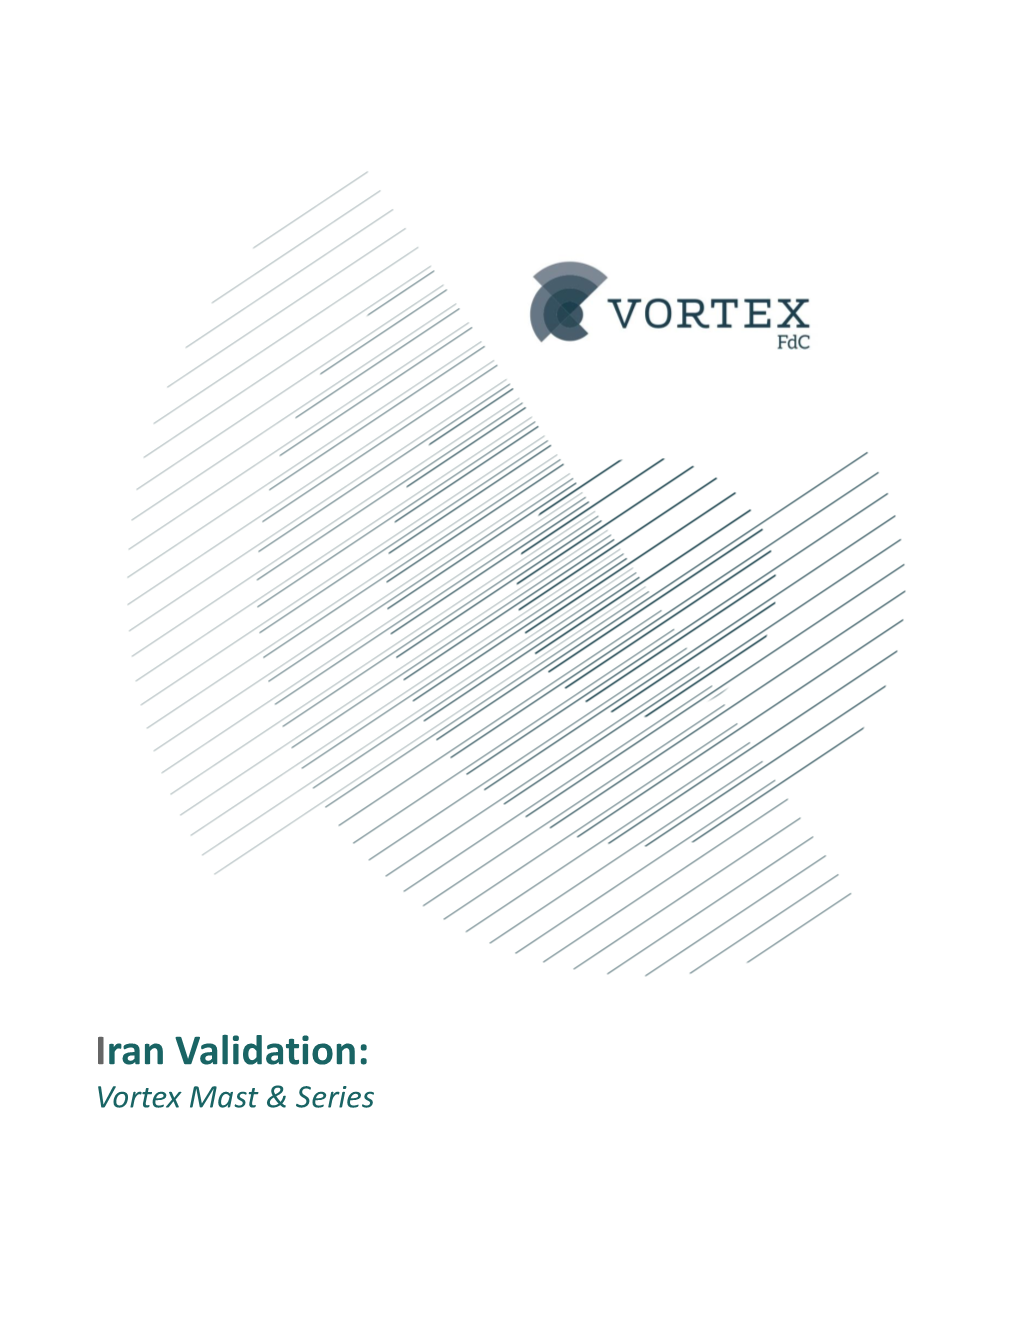 Iran Validation: Vortex Mast & Series